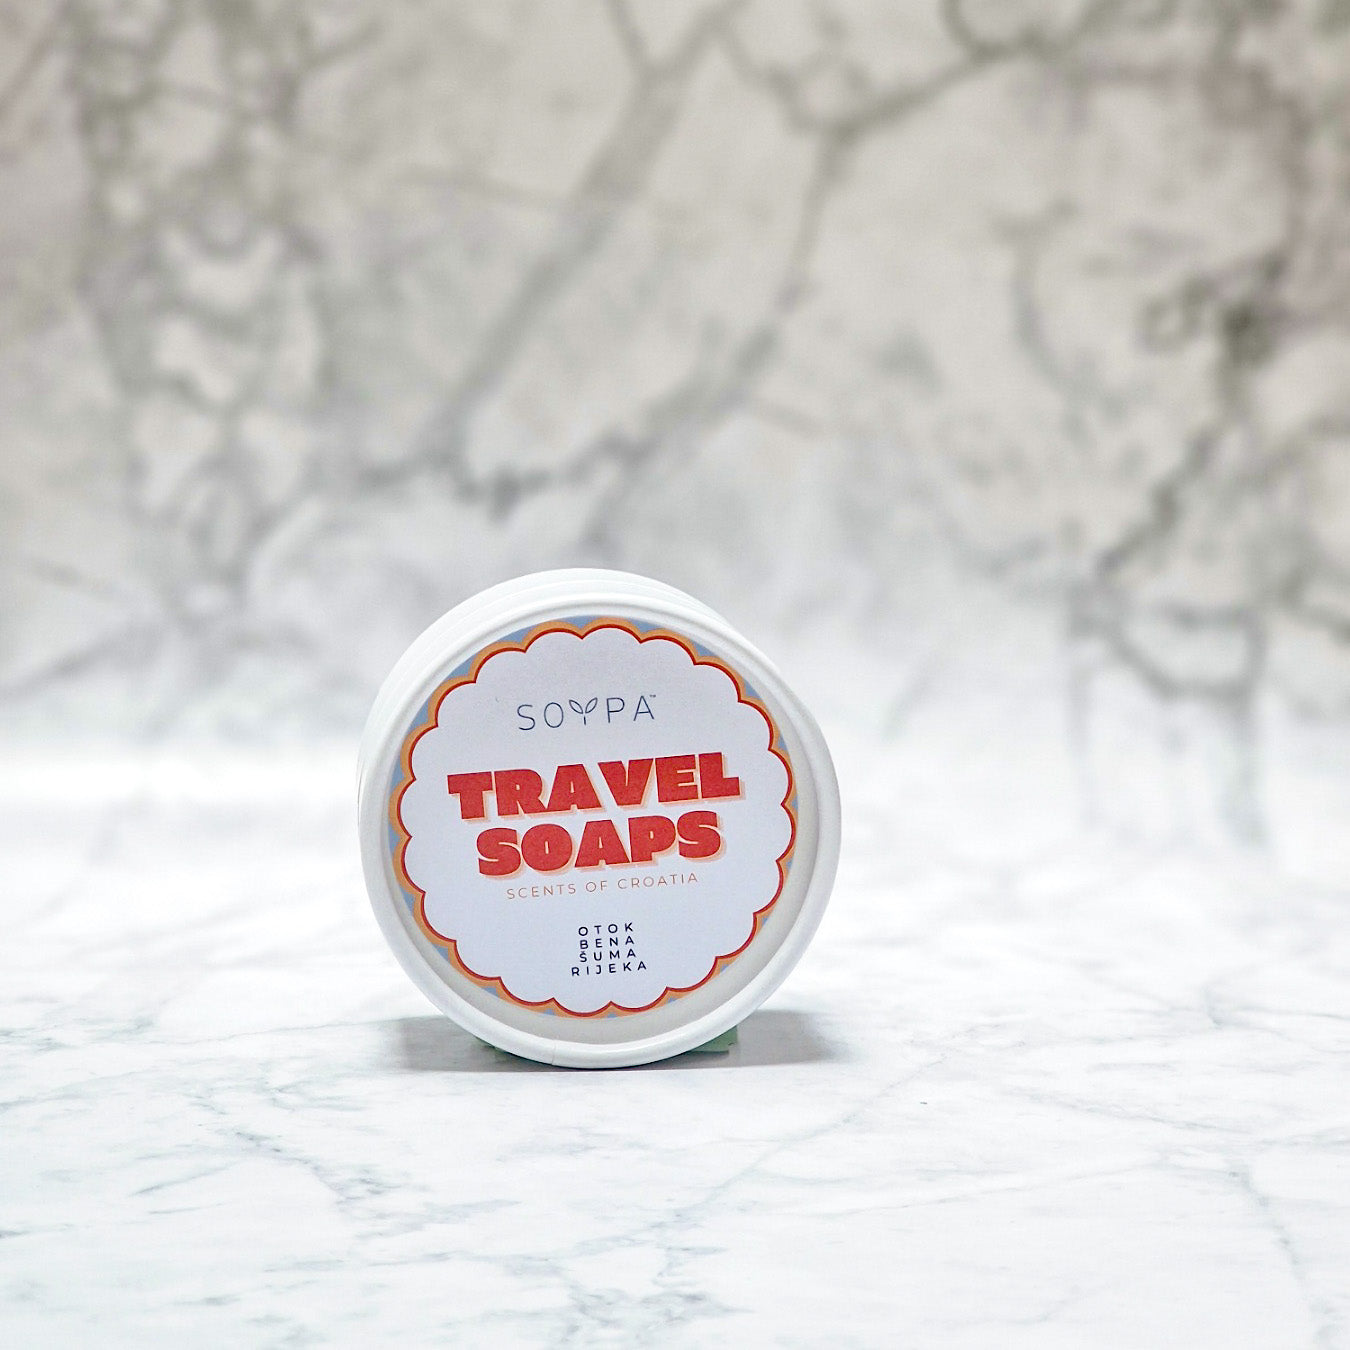 Mini Travel soaps